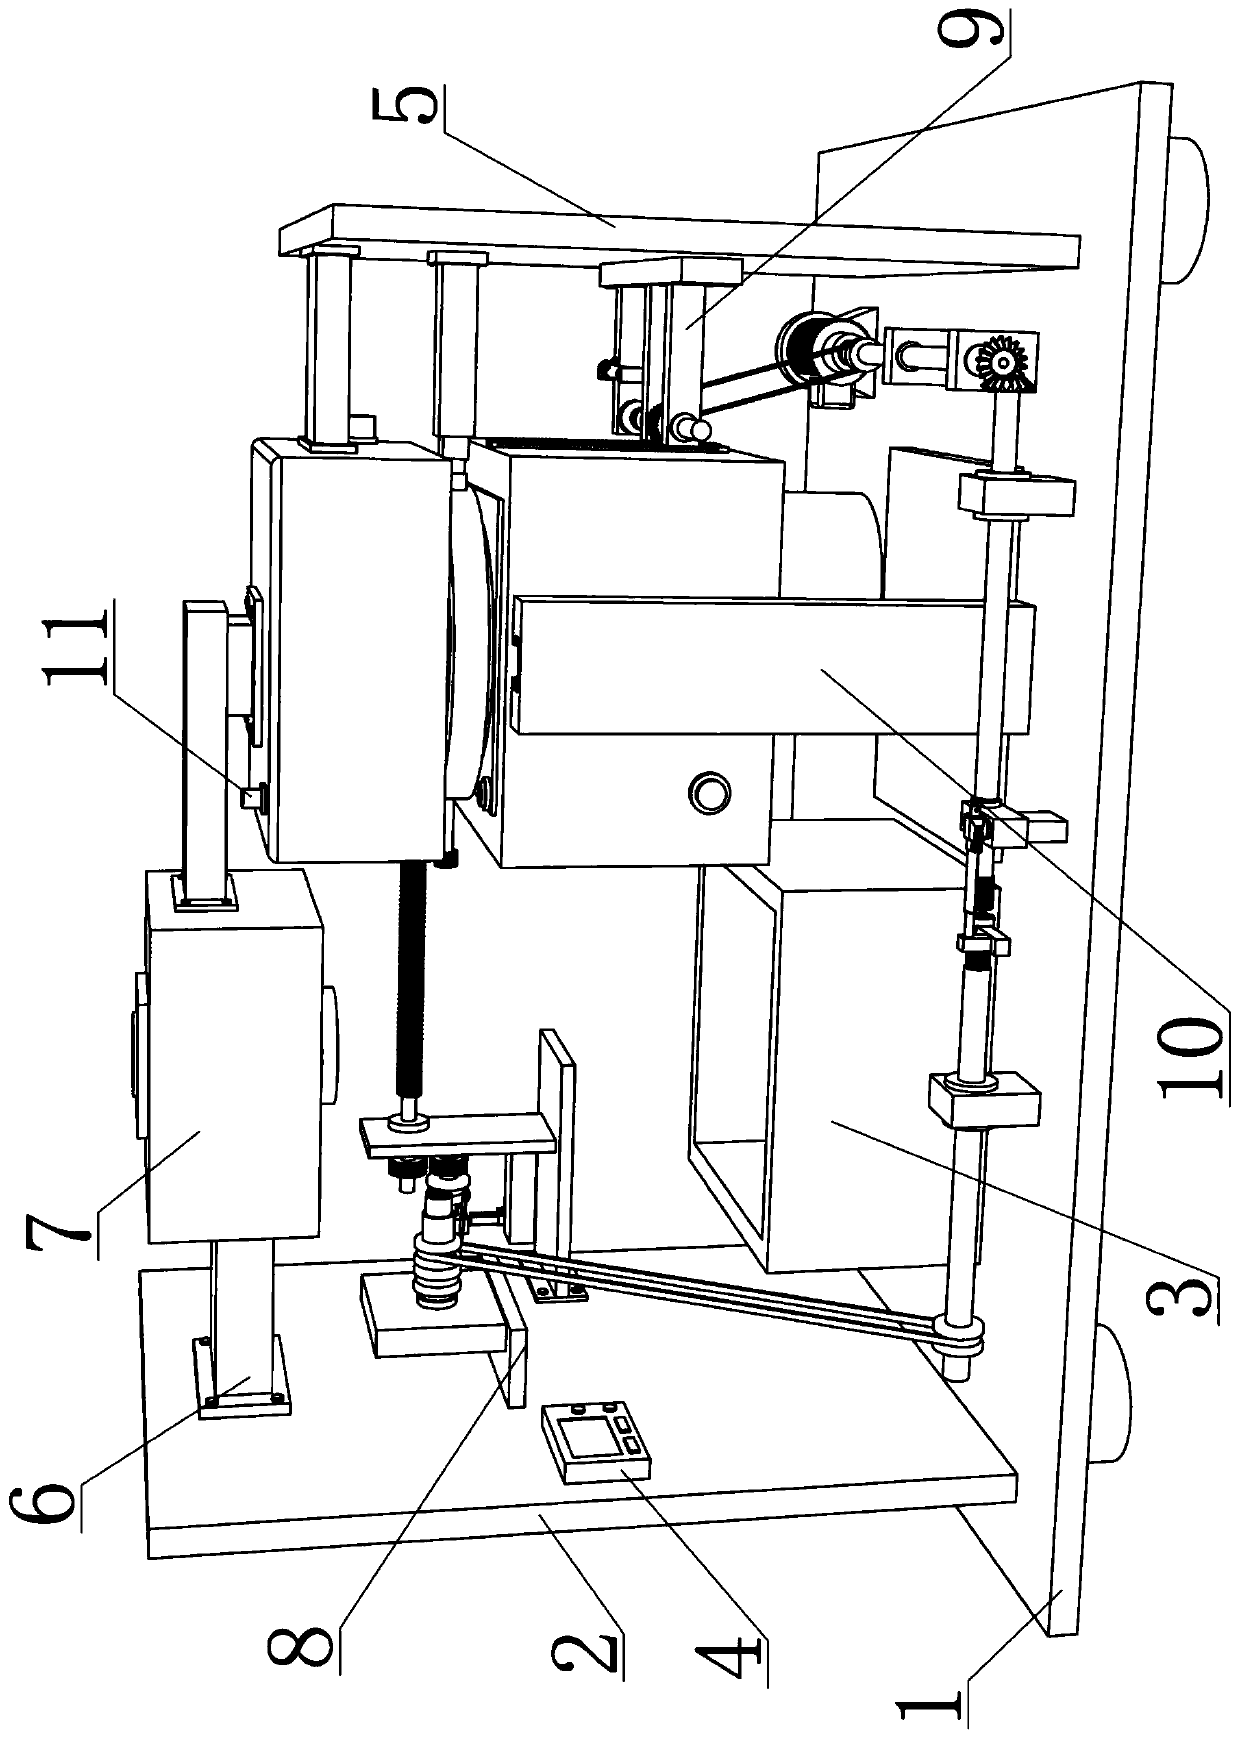 Liquor distillation device